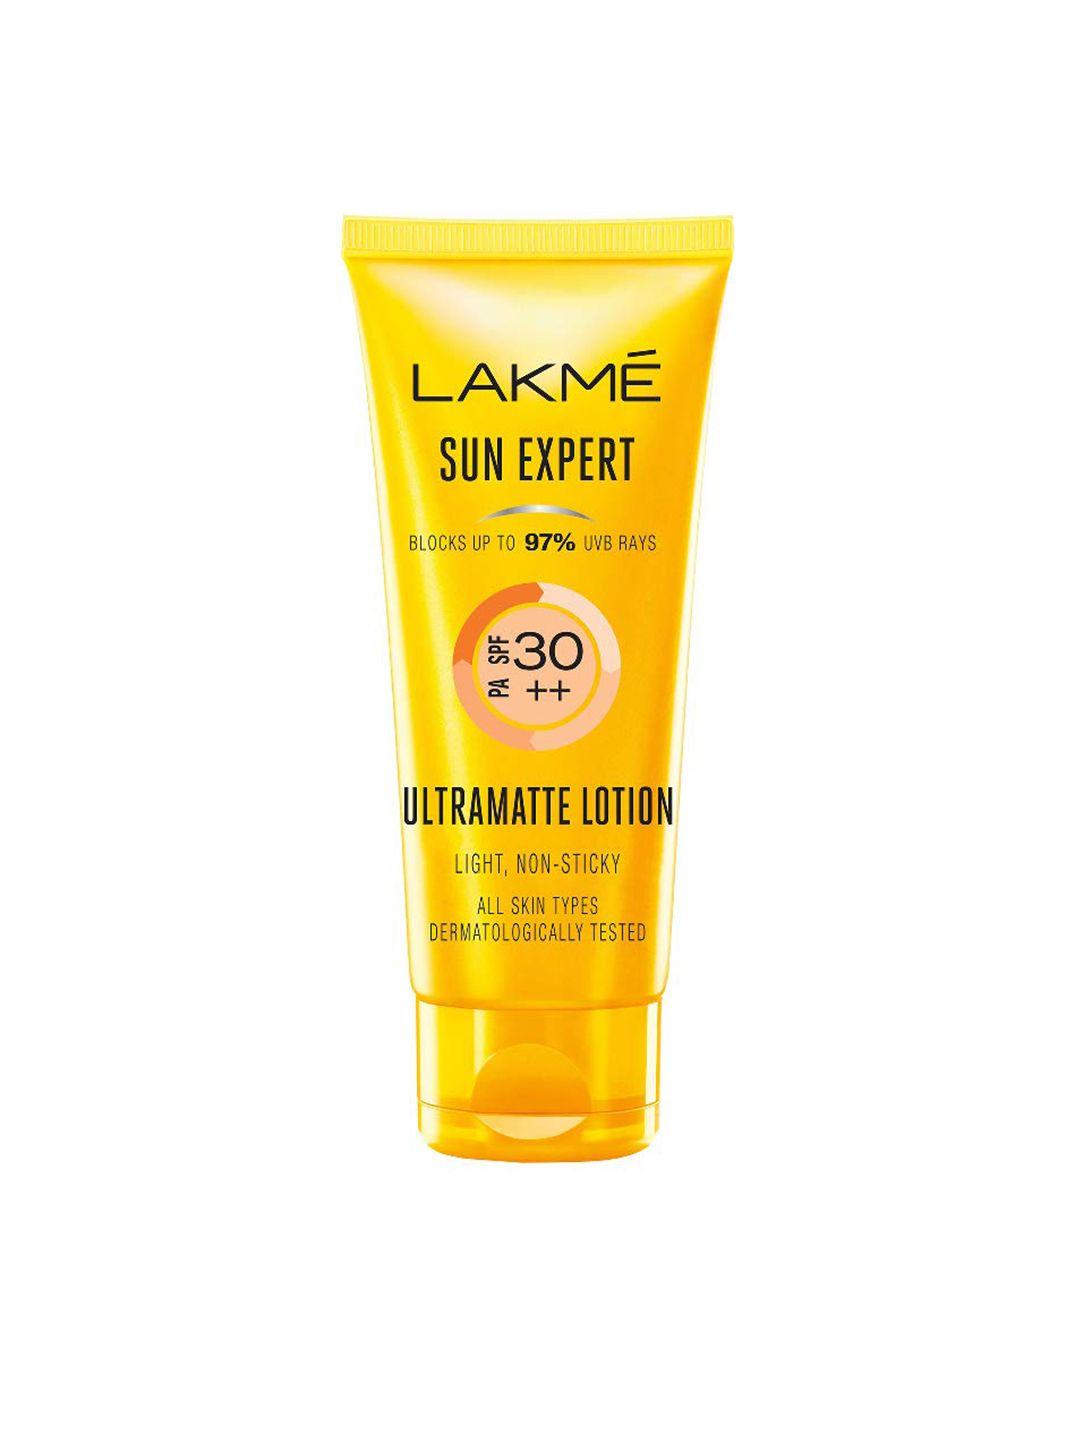 Lakme Sun Expert PA UV Sunscreen with SPF 30